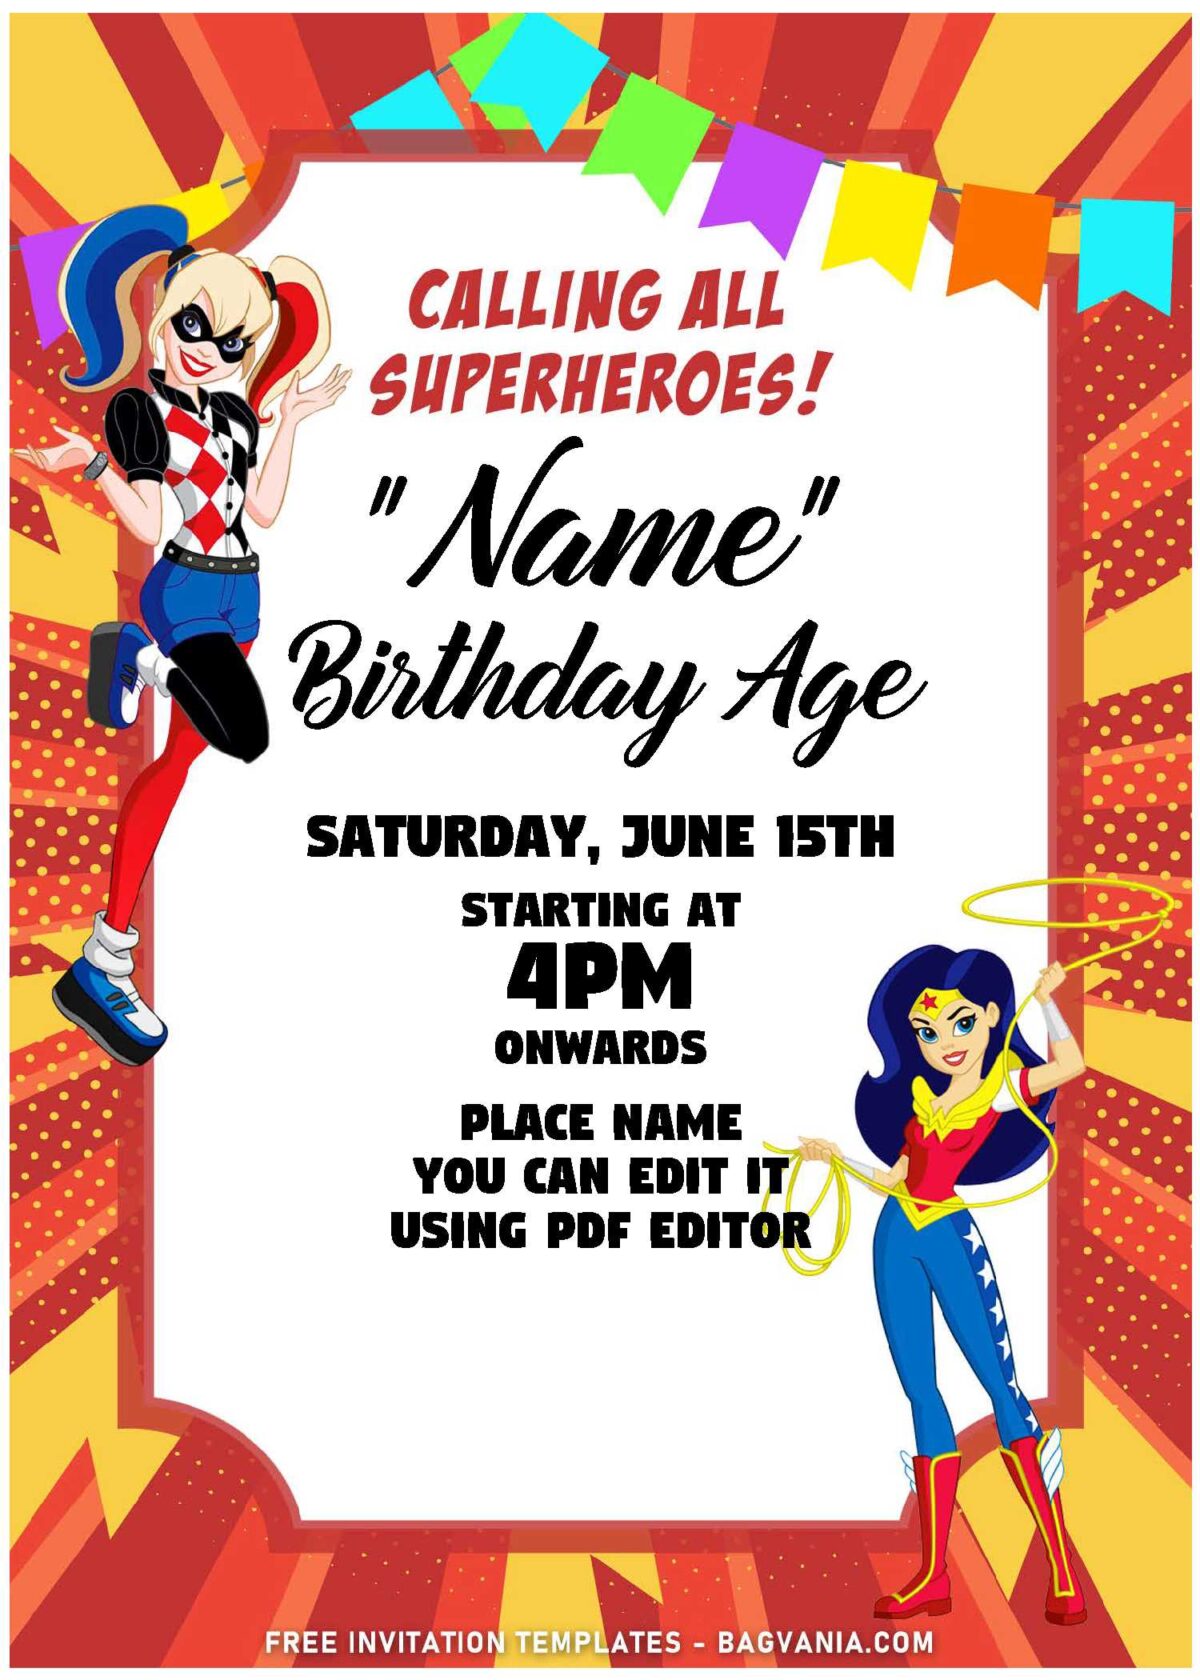 (Free Editable PDF) Super FUN-TASTIC DC Superhero Girls Birthday Invitation Templates with Harley Quinn